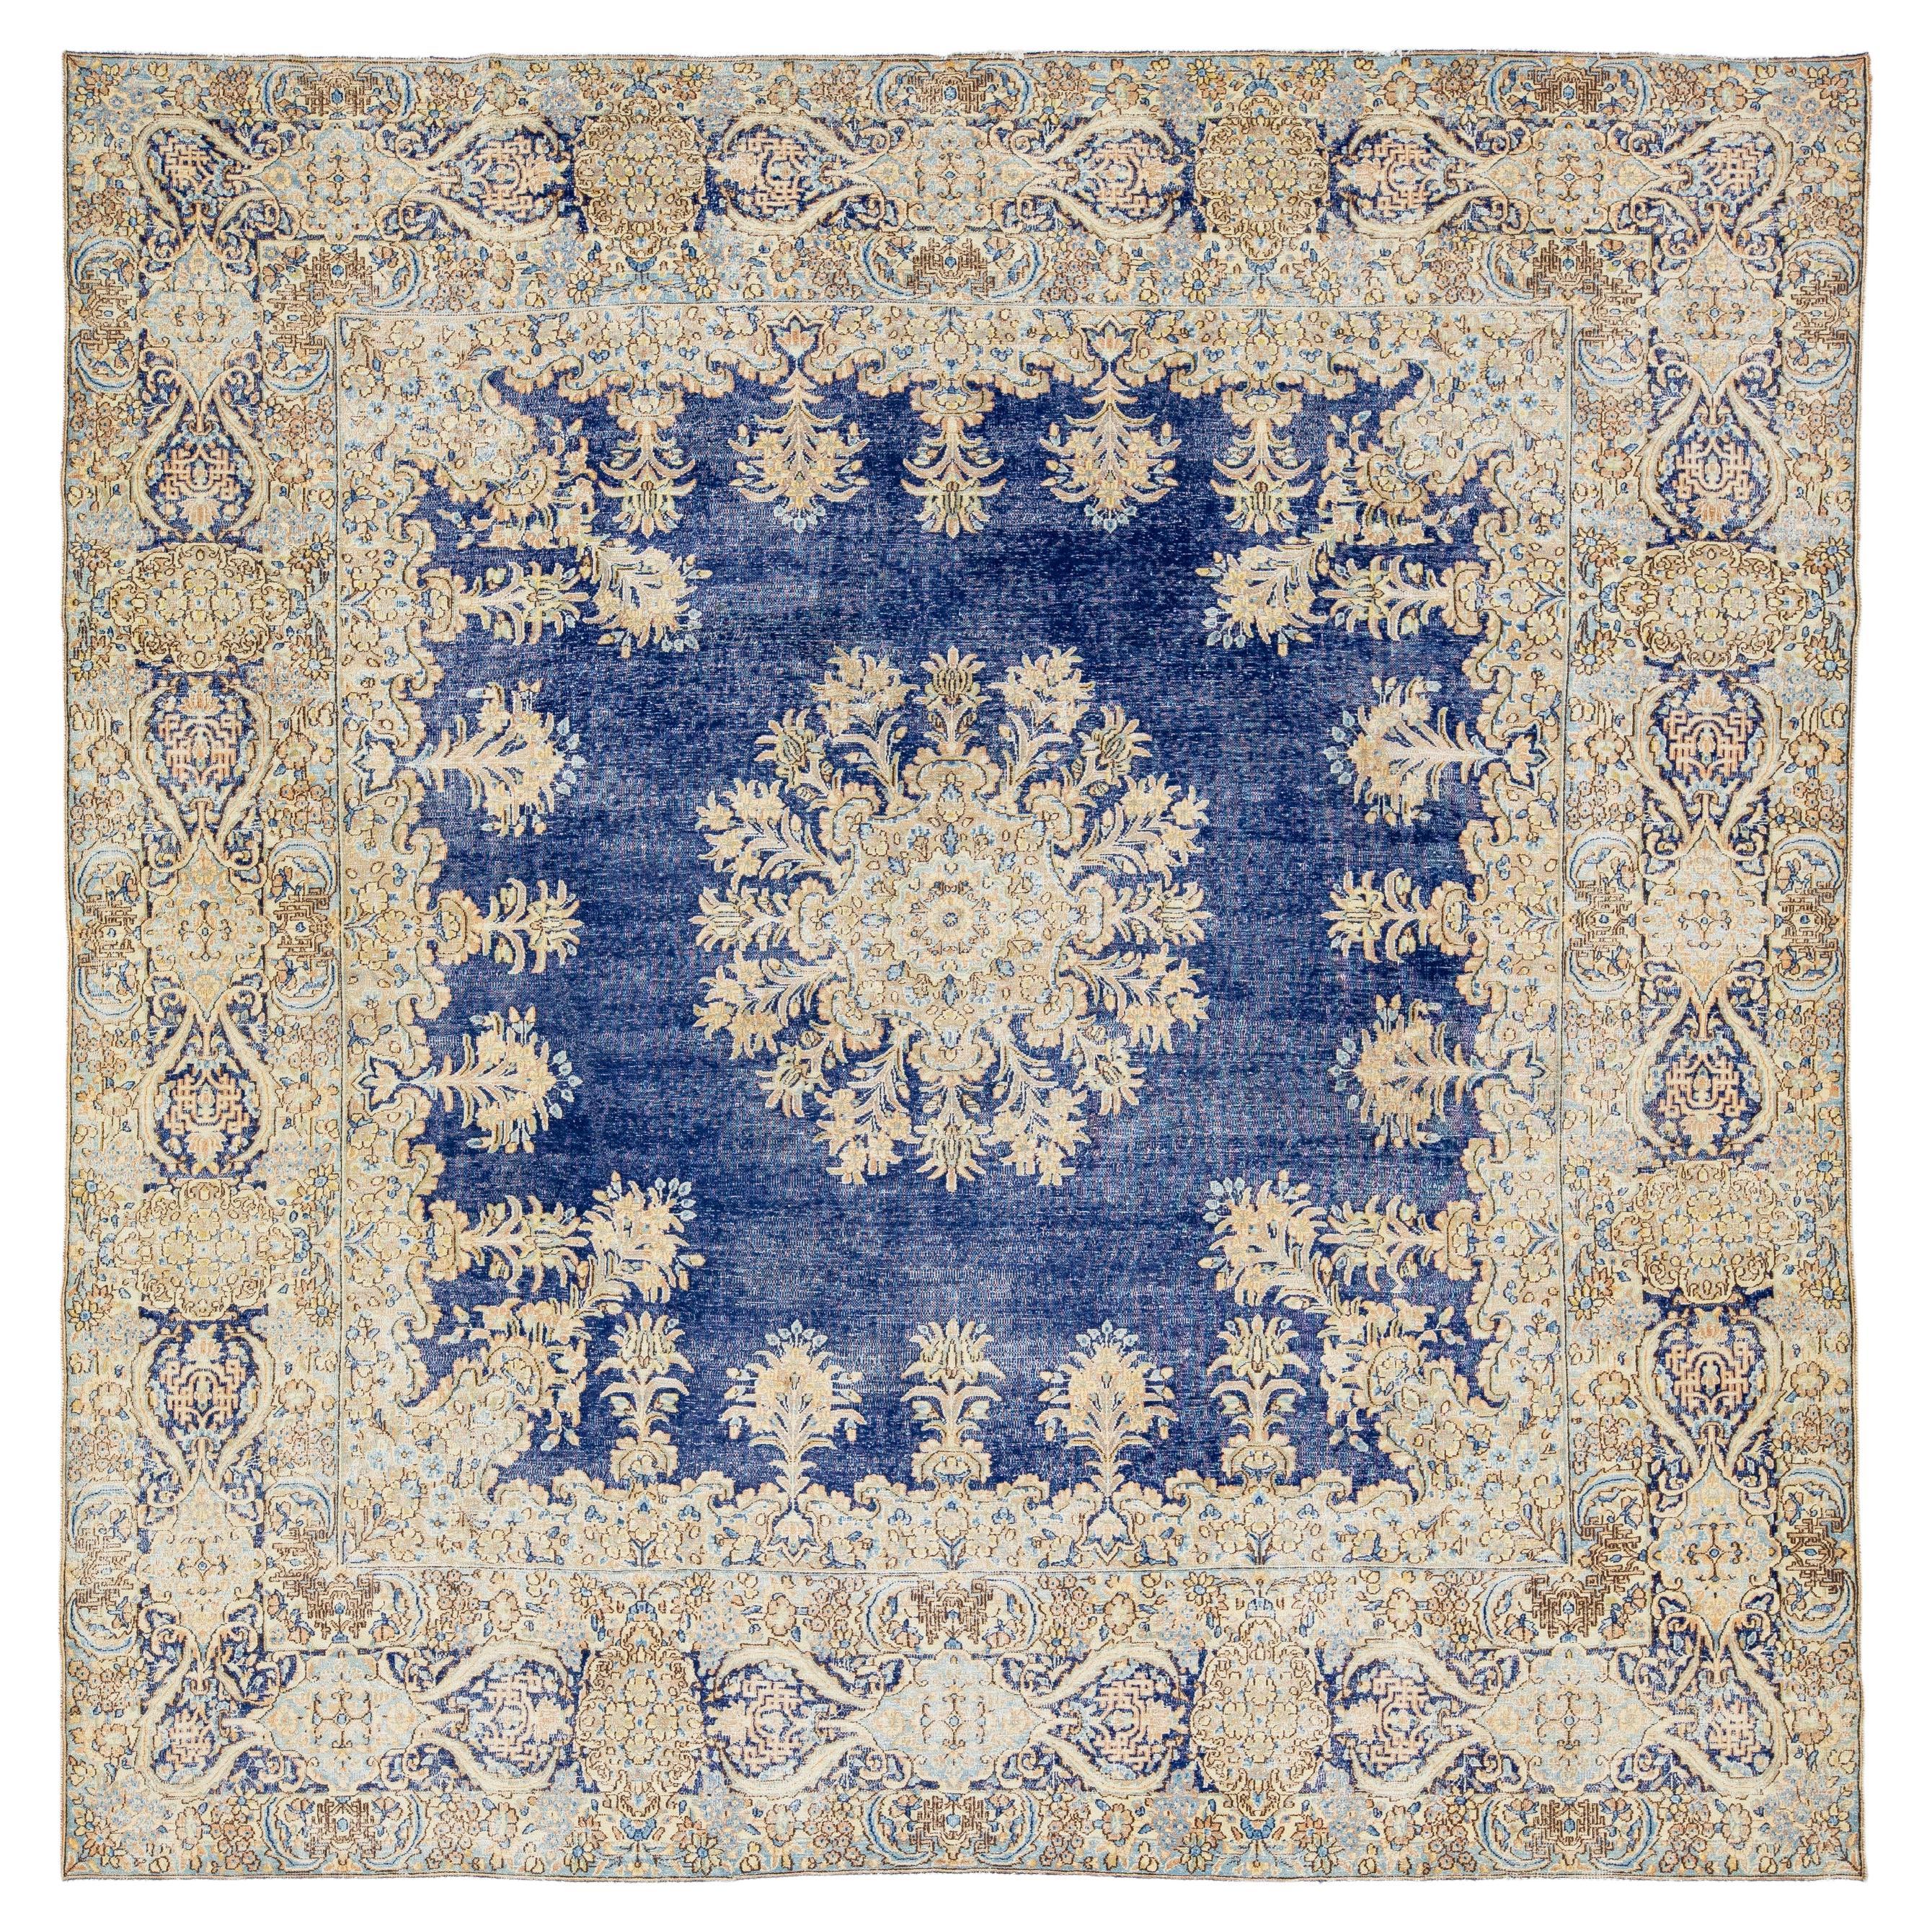 Blue Antique Persian Kerman Square  Wool Rug Handmade Featuring a Rosette Motif 